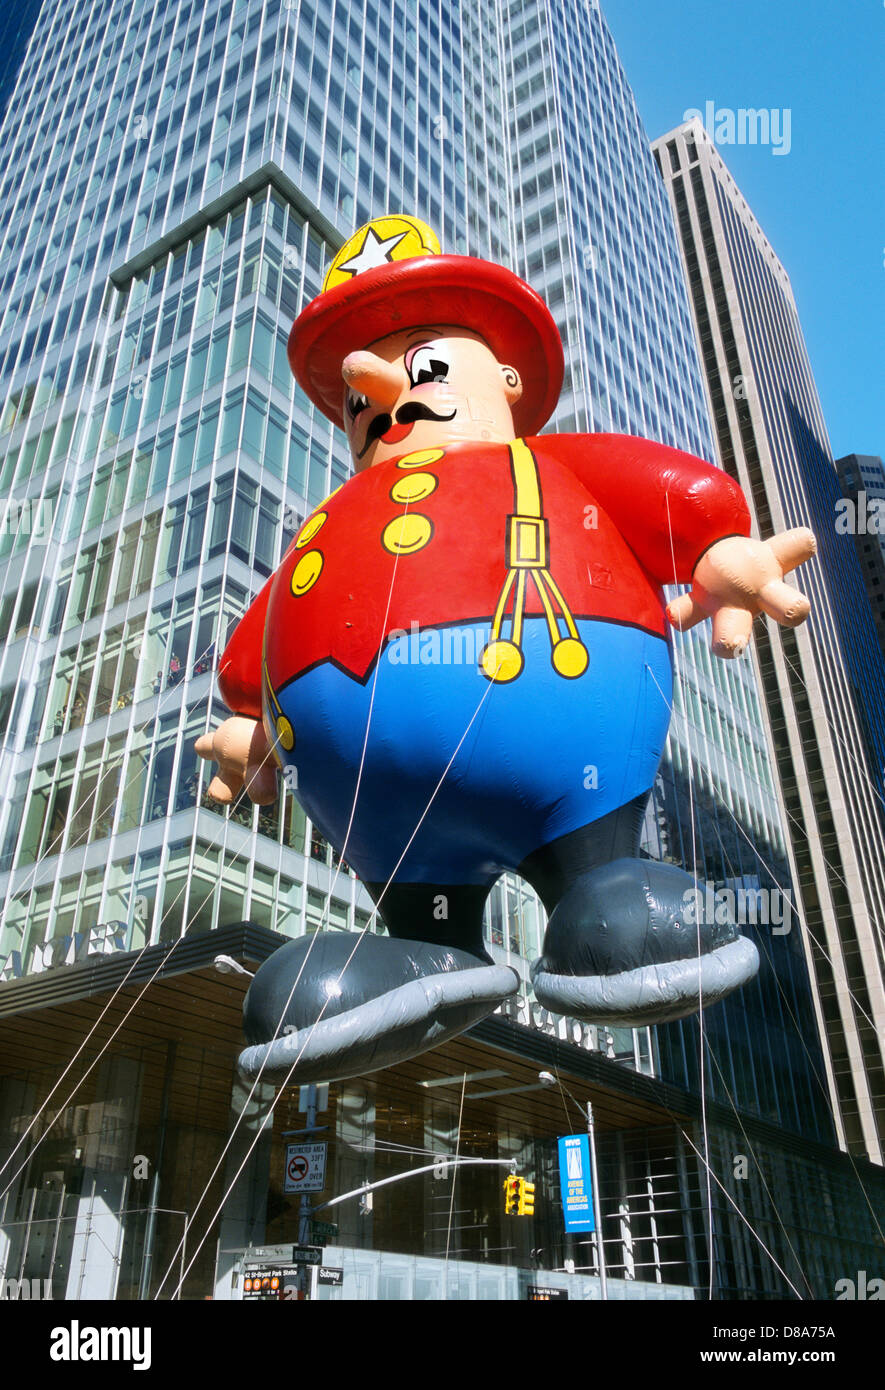 Macy's Thanksgiving Day Parade New York City Harold the Fireman Ballon. Comic-Figur. Traditionelle Festtage. Stockfoto